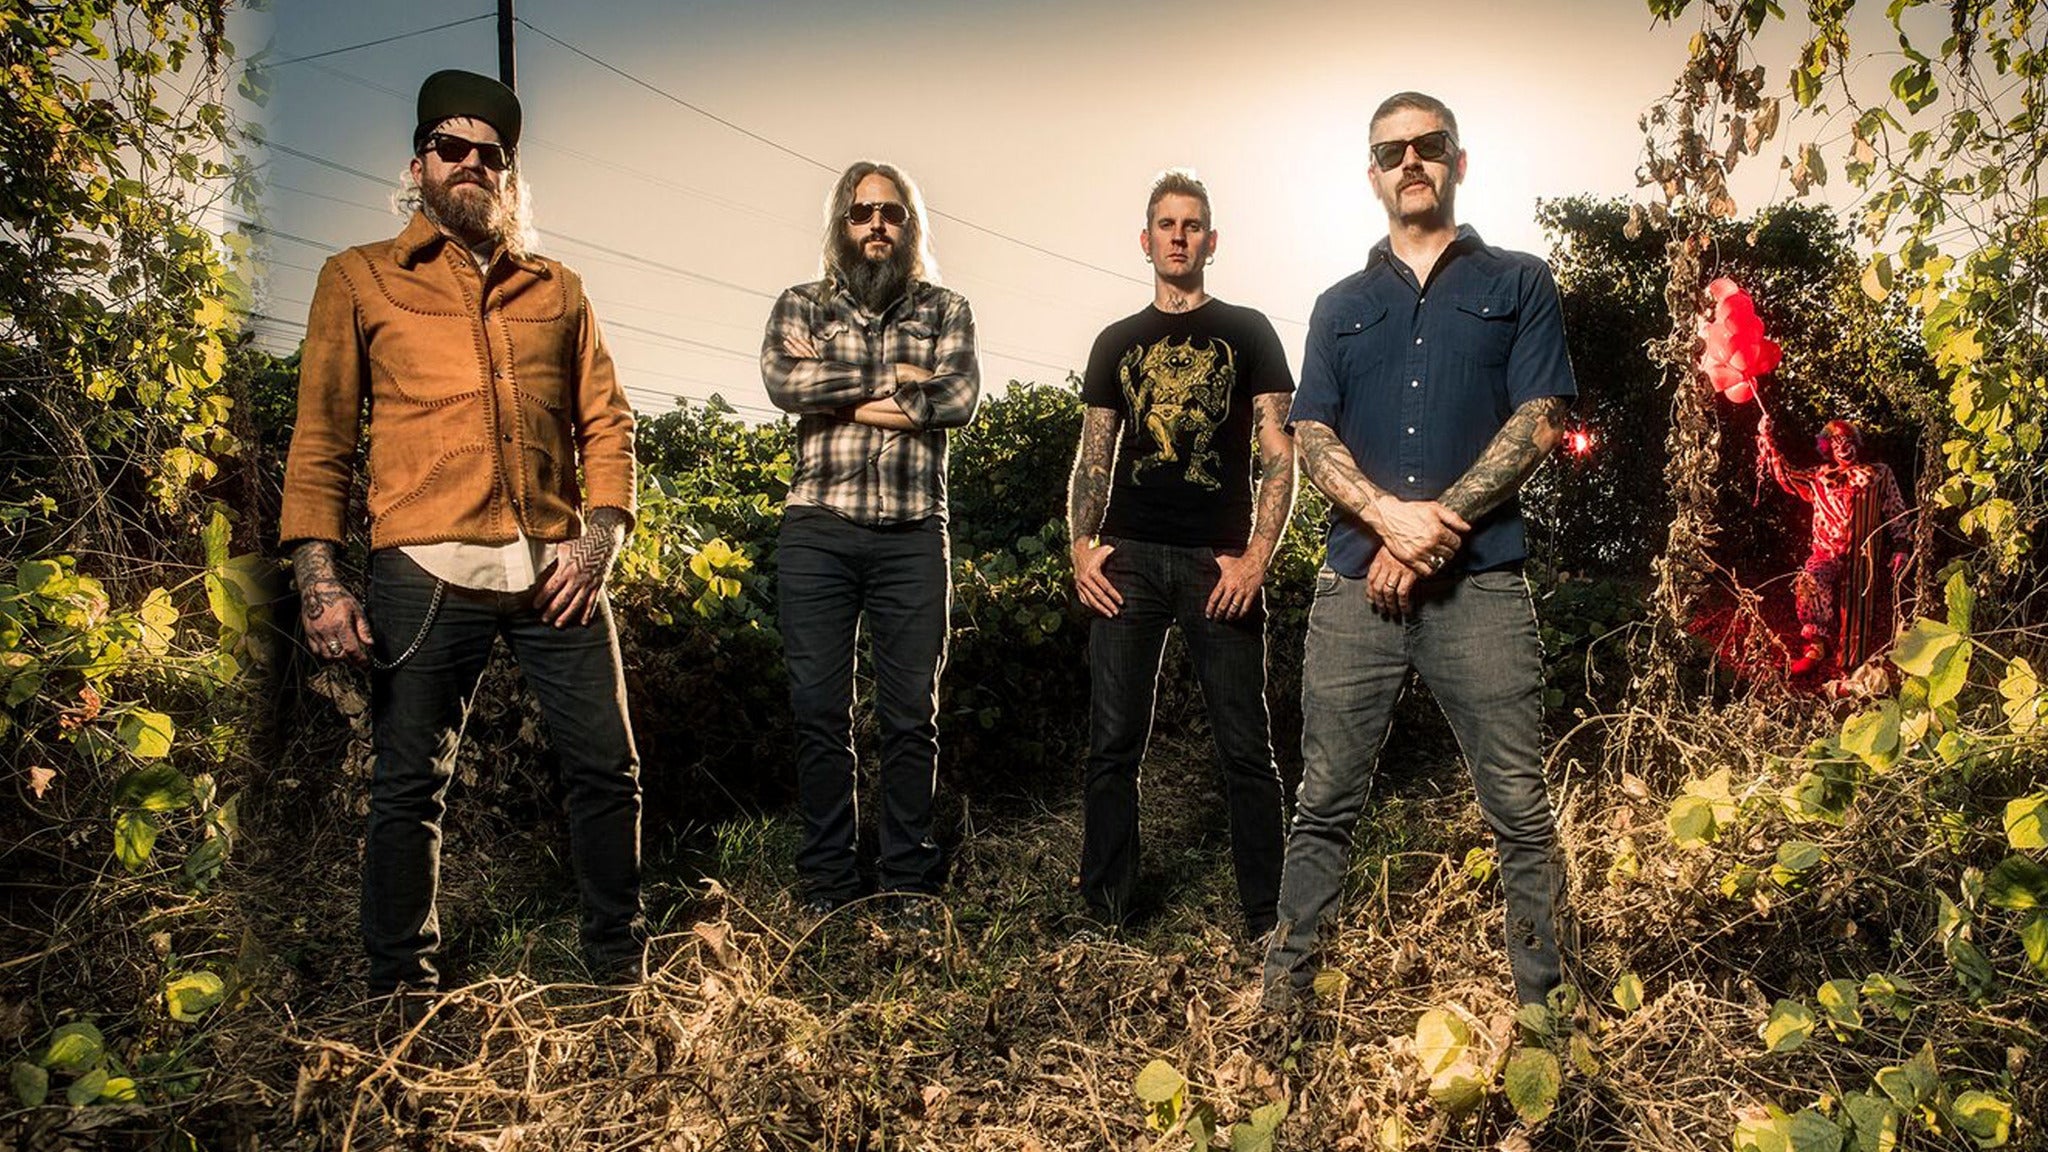 Mastodon / Opeth presale code for early tickets in Dallas